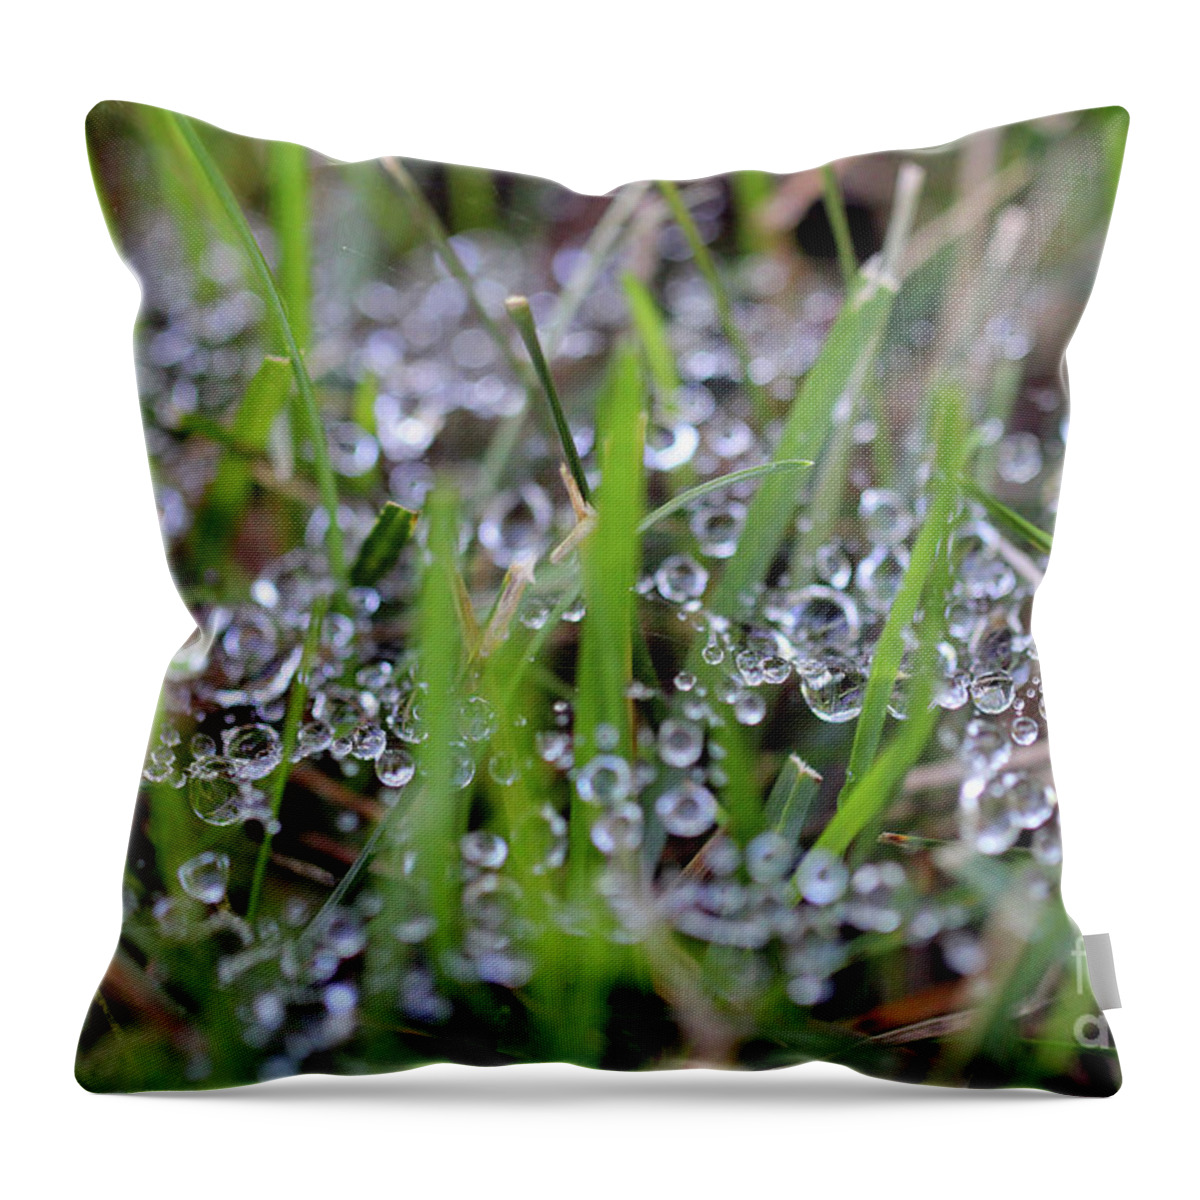 Dew Throw Pillow featuring the photograph Dew Drops in Grass #3 by Karen Adams